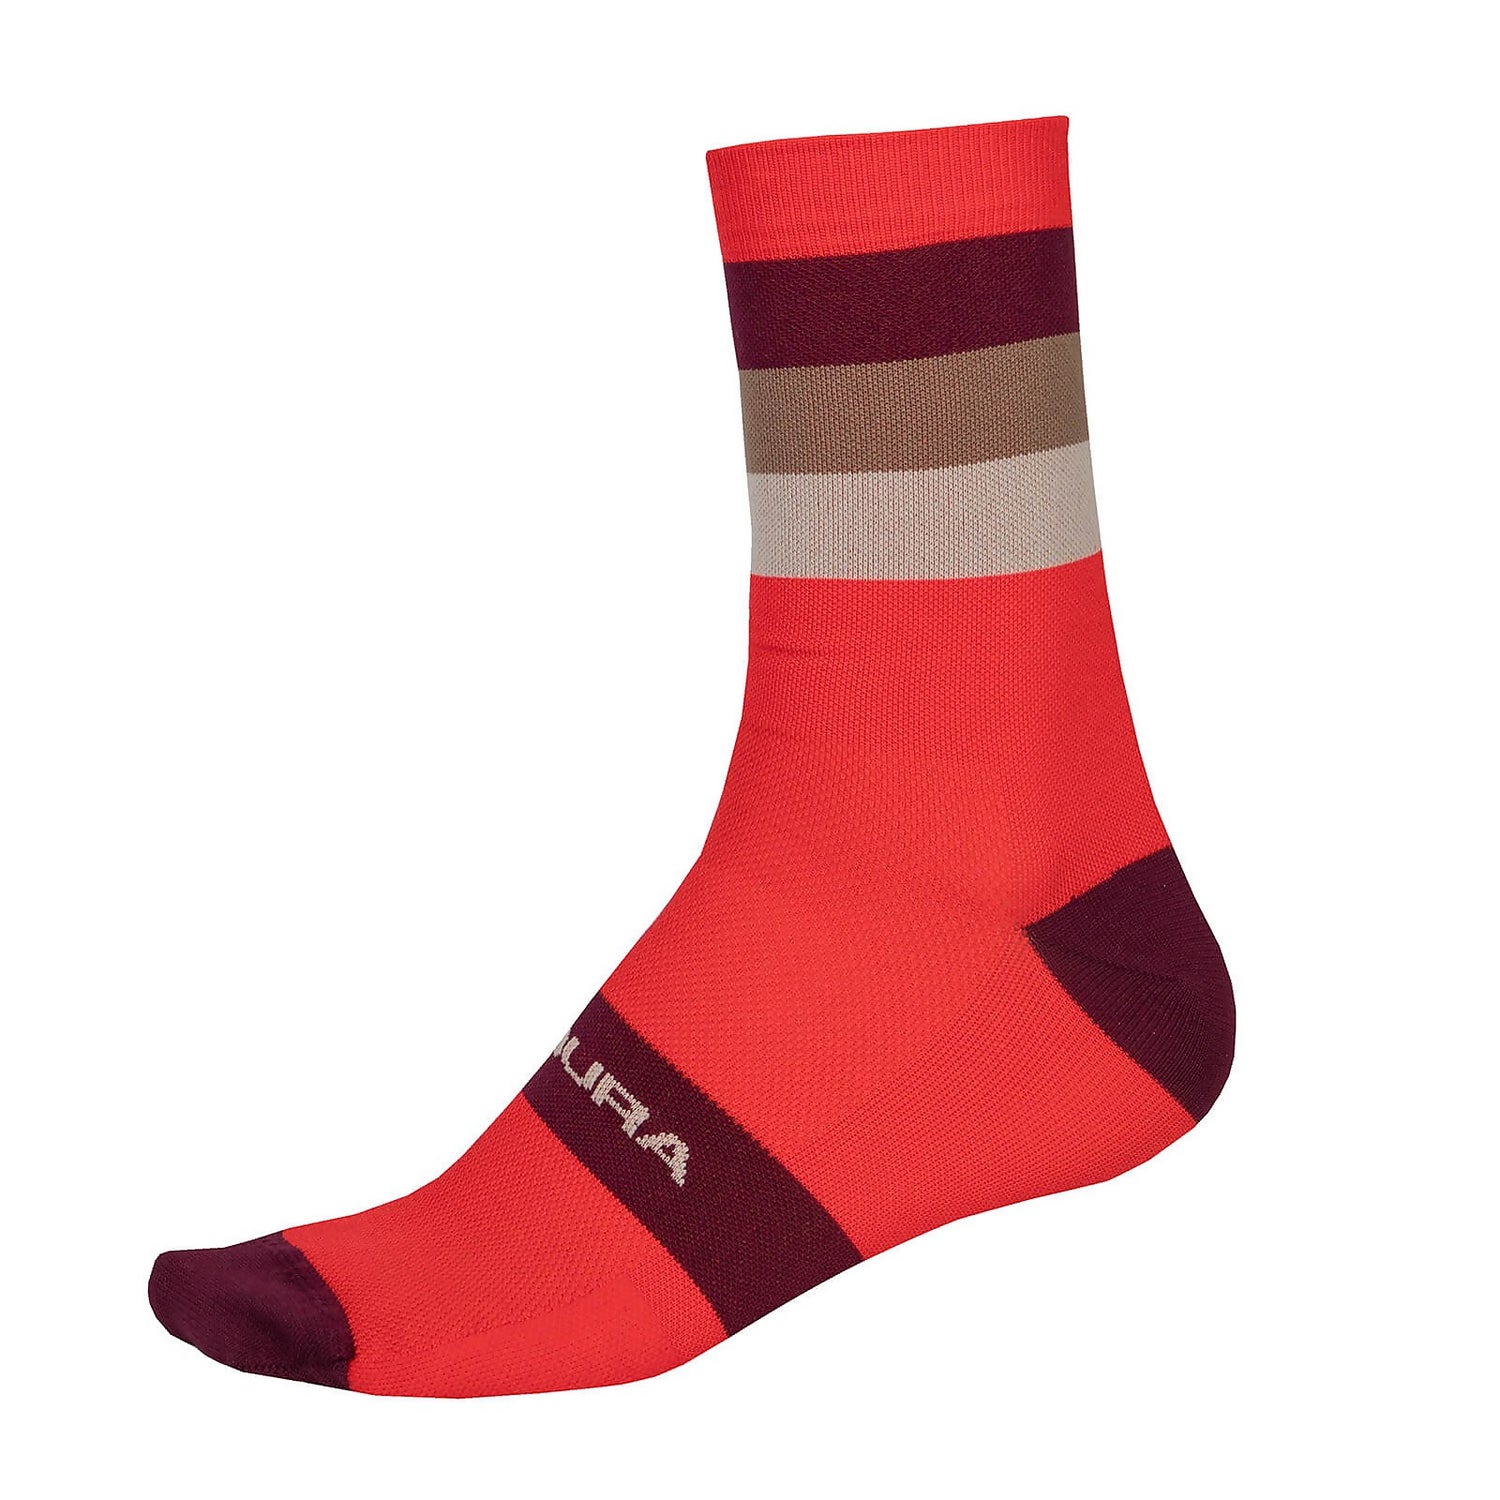 Bandwidth Sock - Red